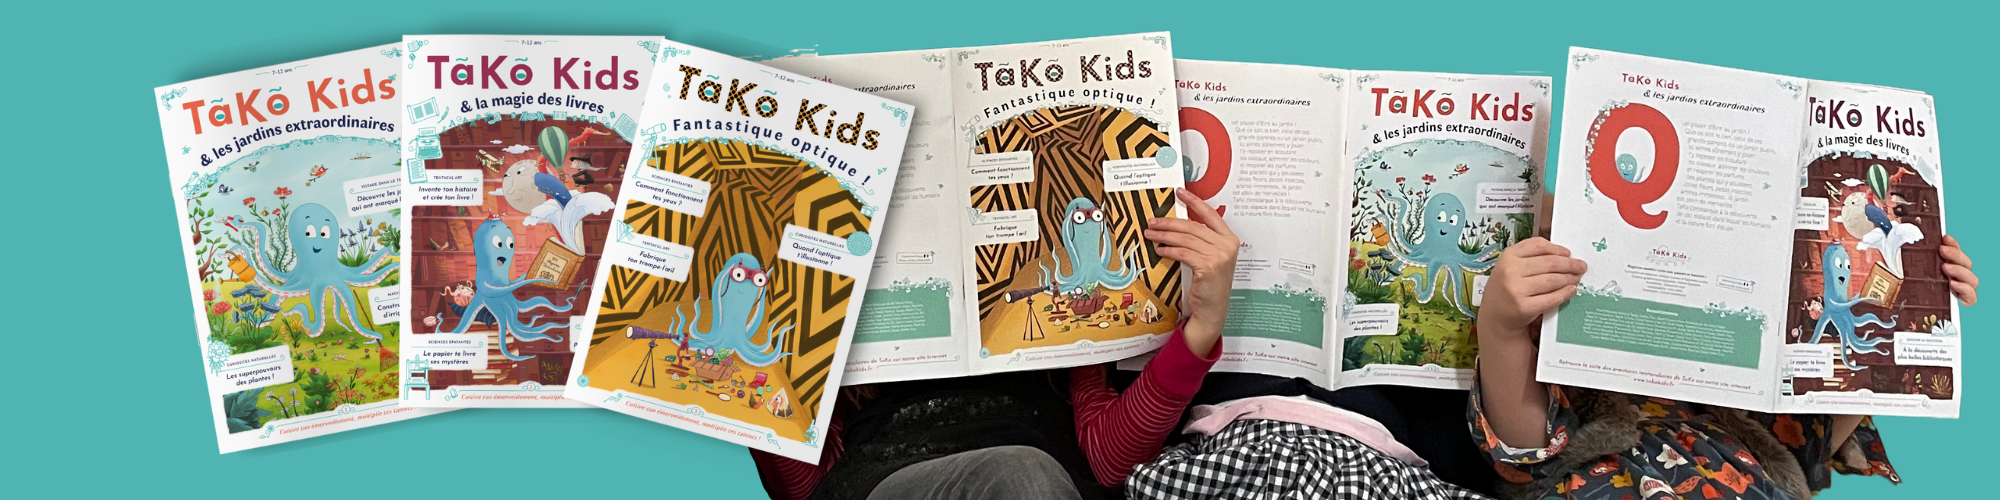 n°2 - La magie des livres – TaKo Kids